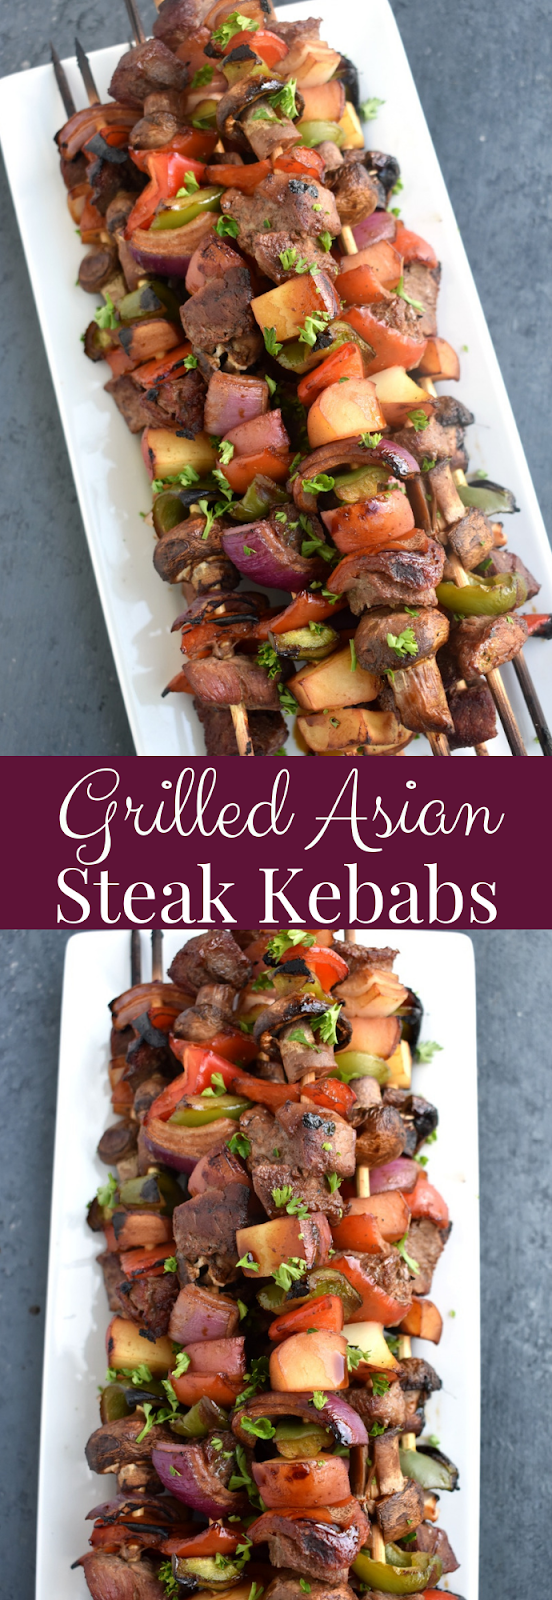 Grilled Asian Steak Kebabs recipe